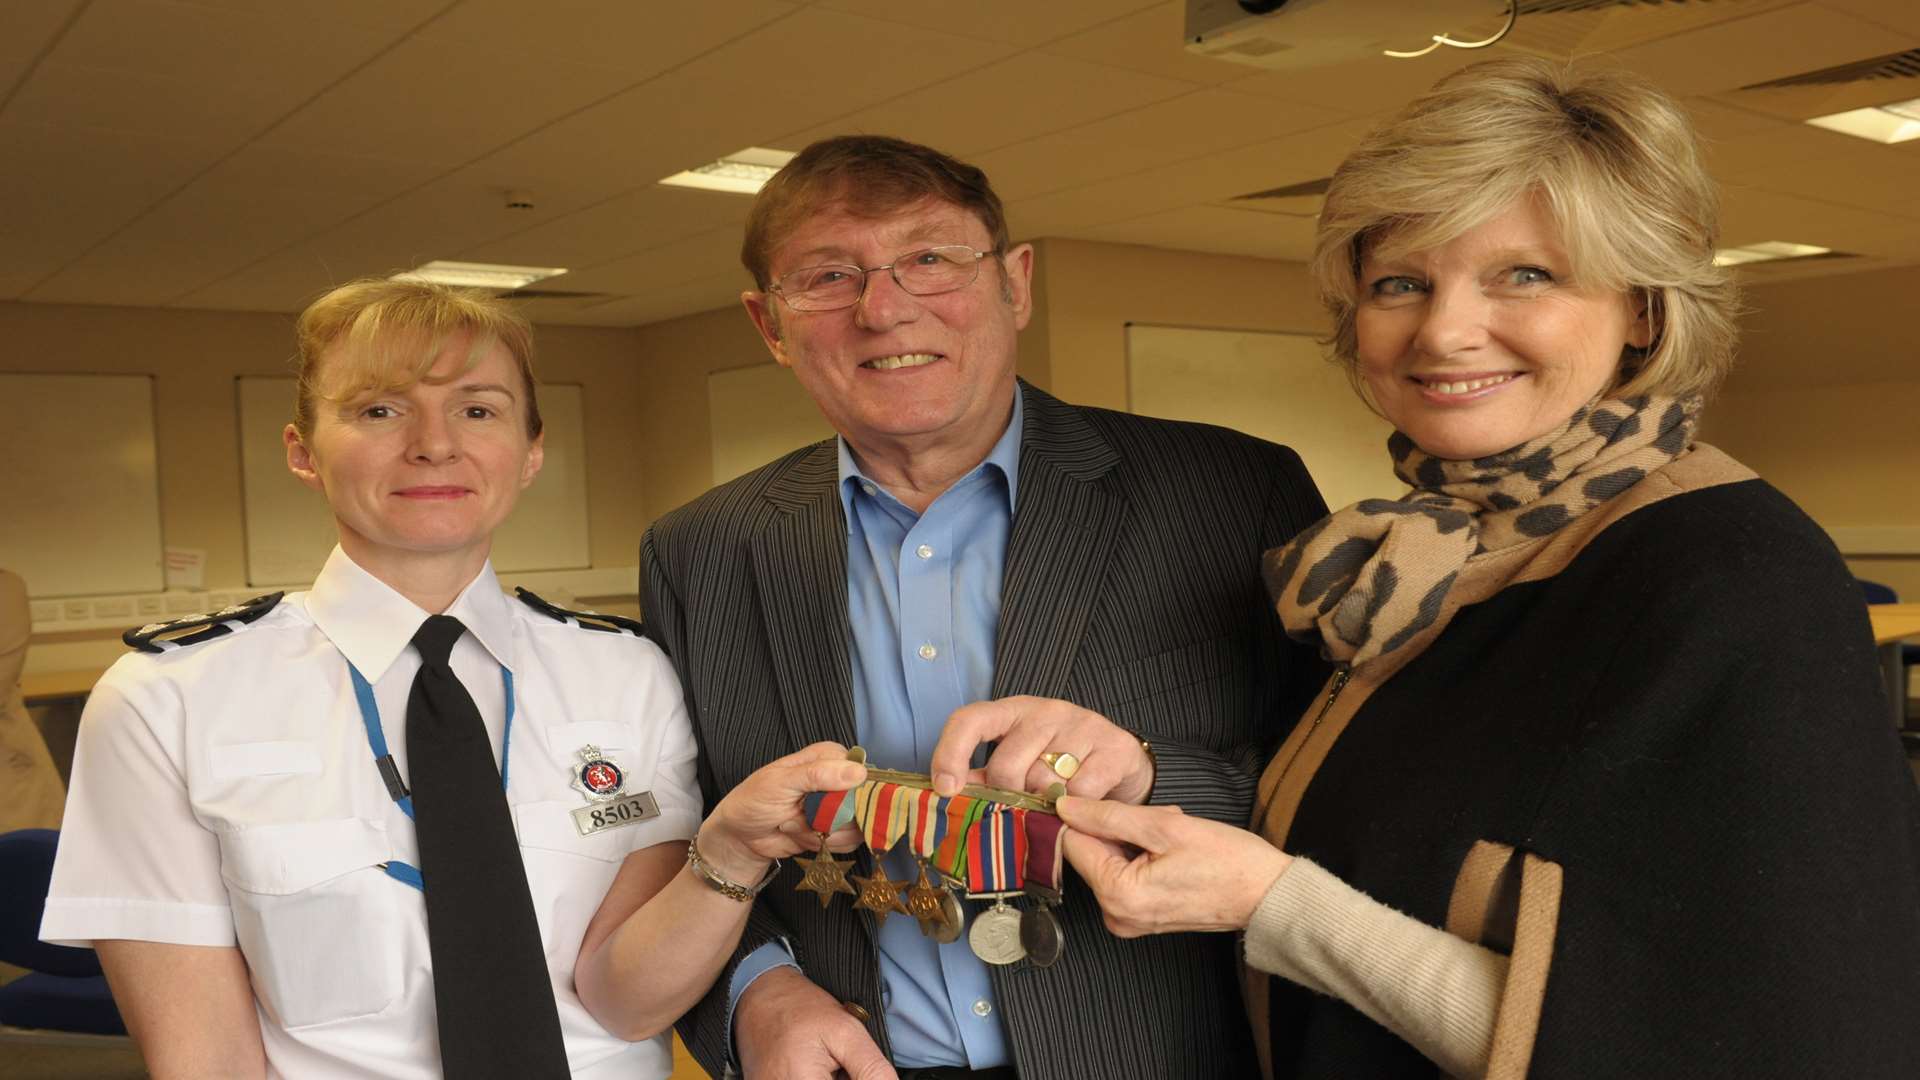 DCI Susie Harper presented the stolen medals back to Leonard and Anne Hazeldine.